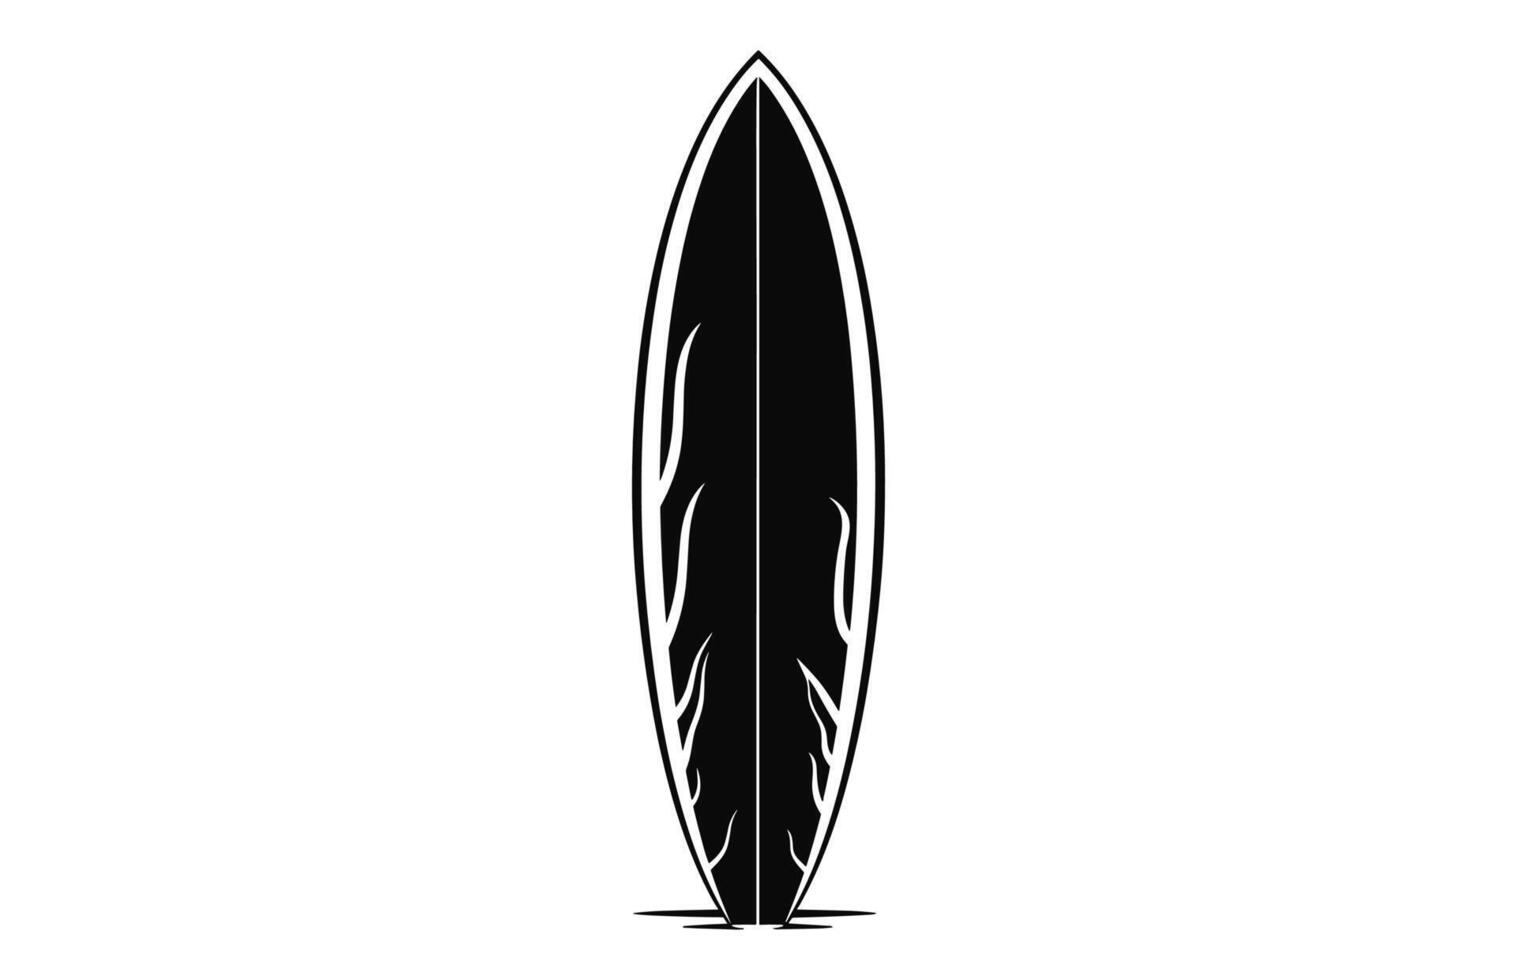 A Surfboard Vector sketch black Outline art free